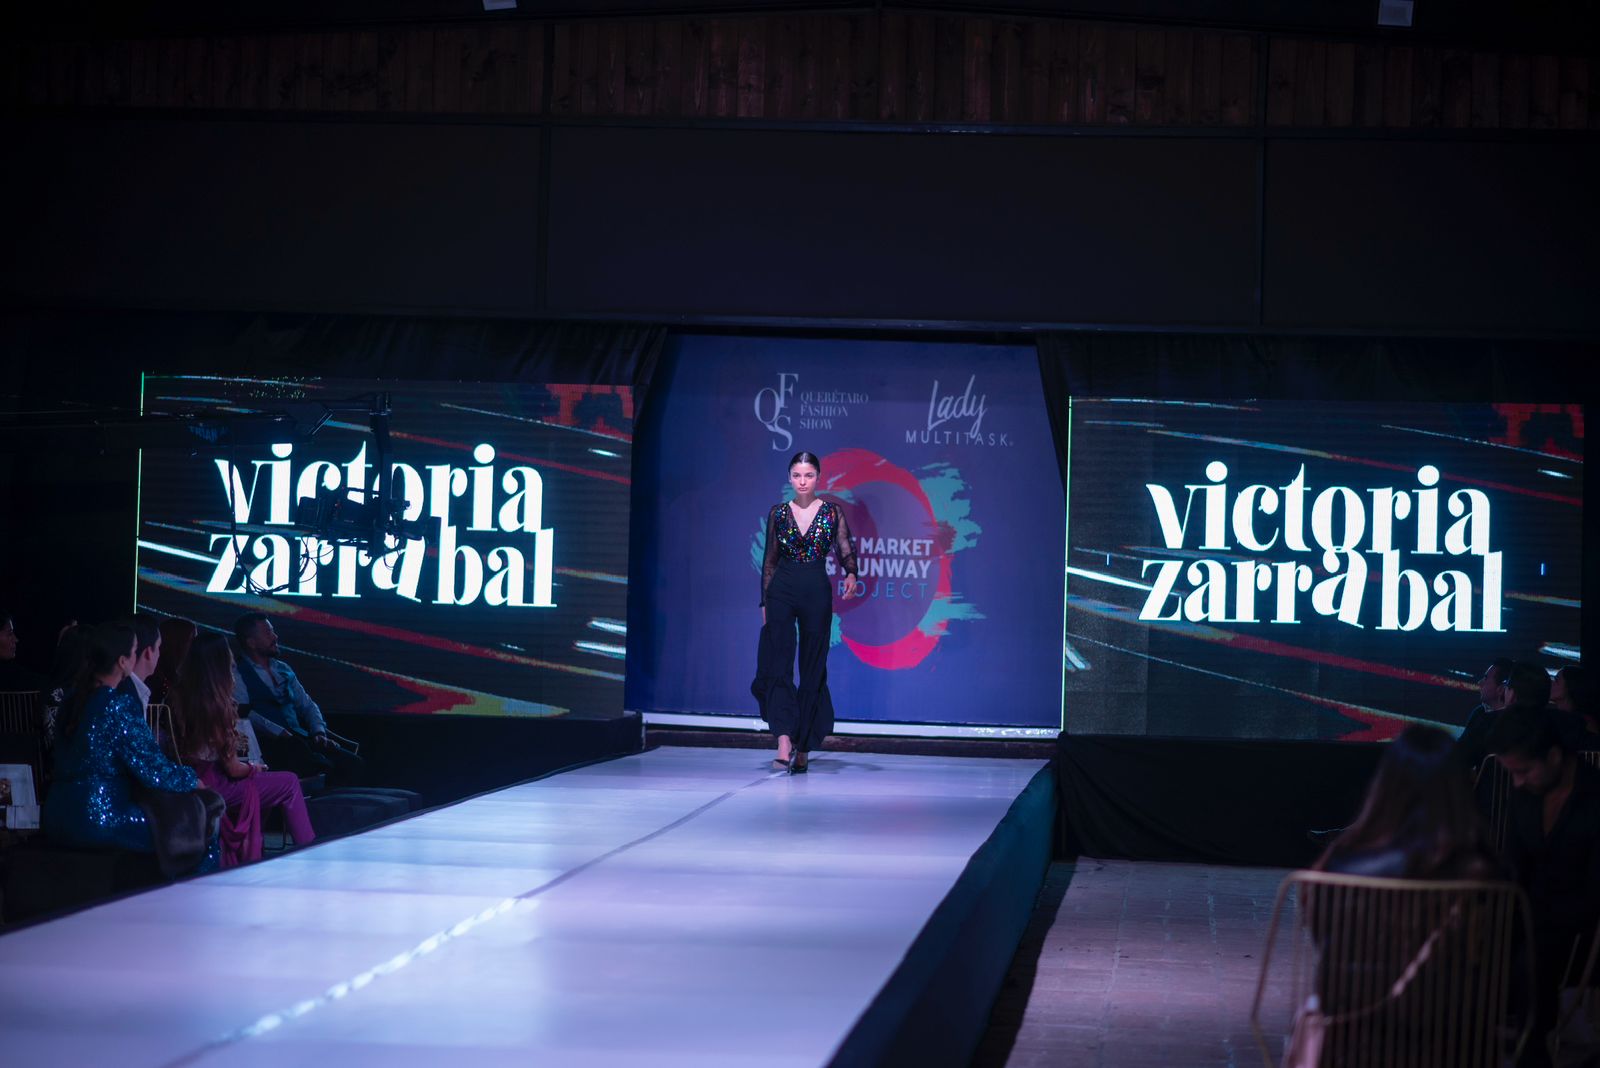 Victoria Zarrabal Diseños presente en la 4ta edición del Querétaro Fashion Show 'The Market & Runway Project Victoria Zarrabal  https://larevistadelsureste.com